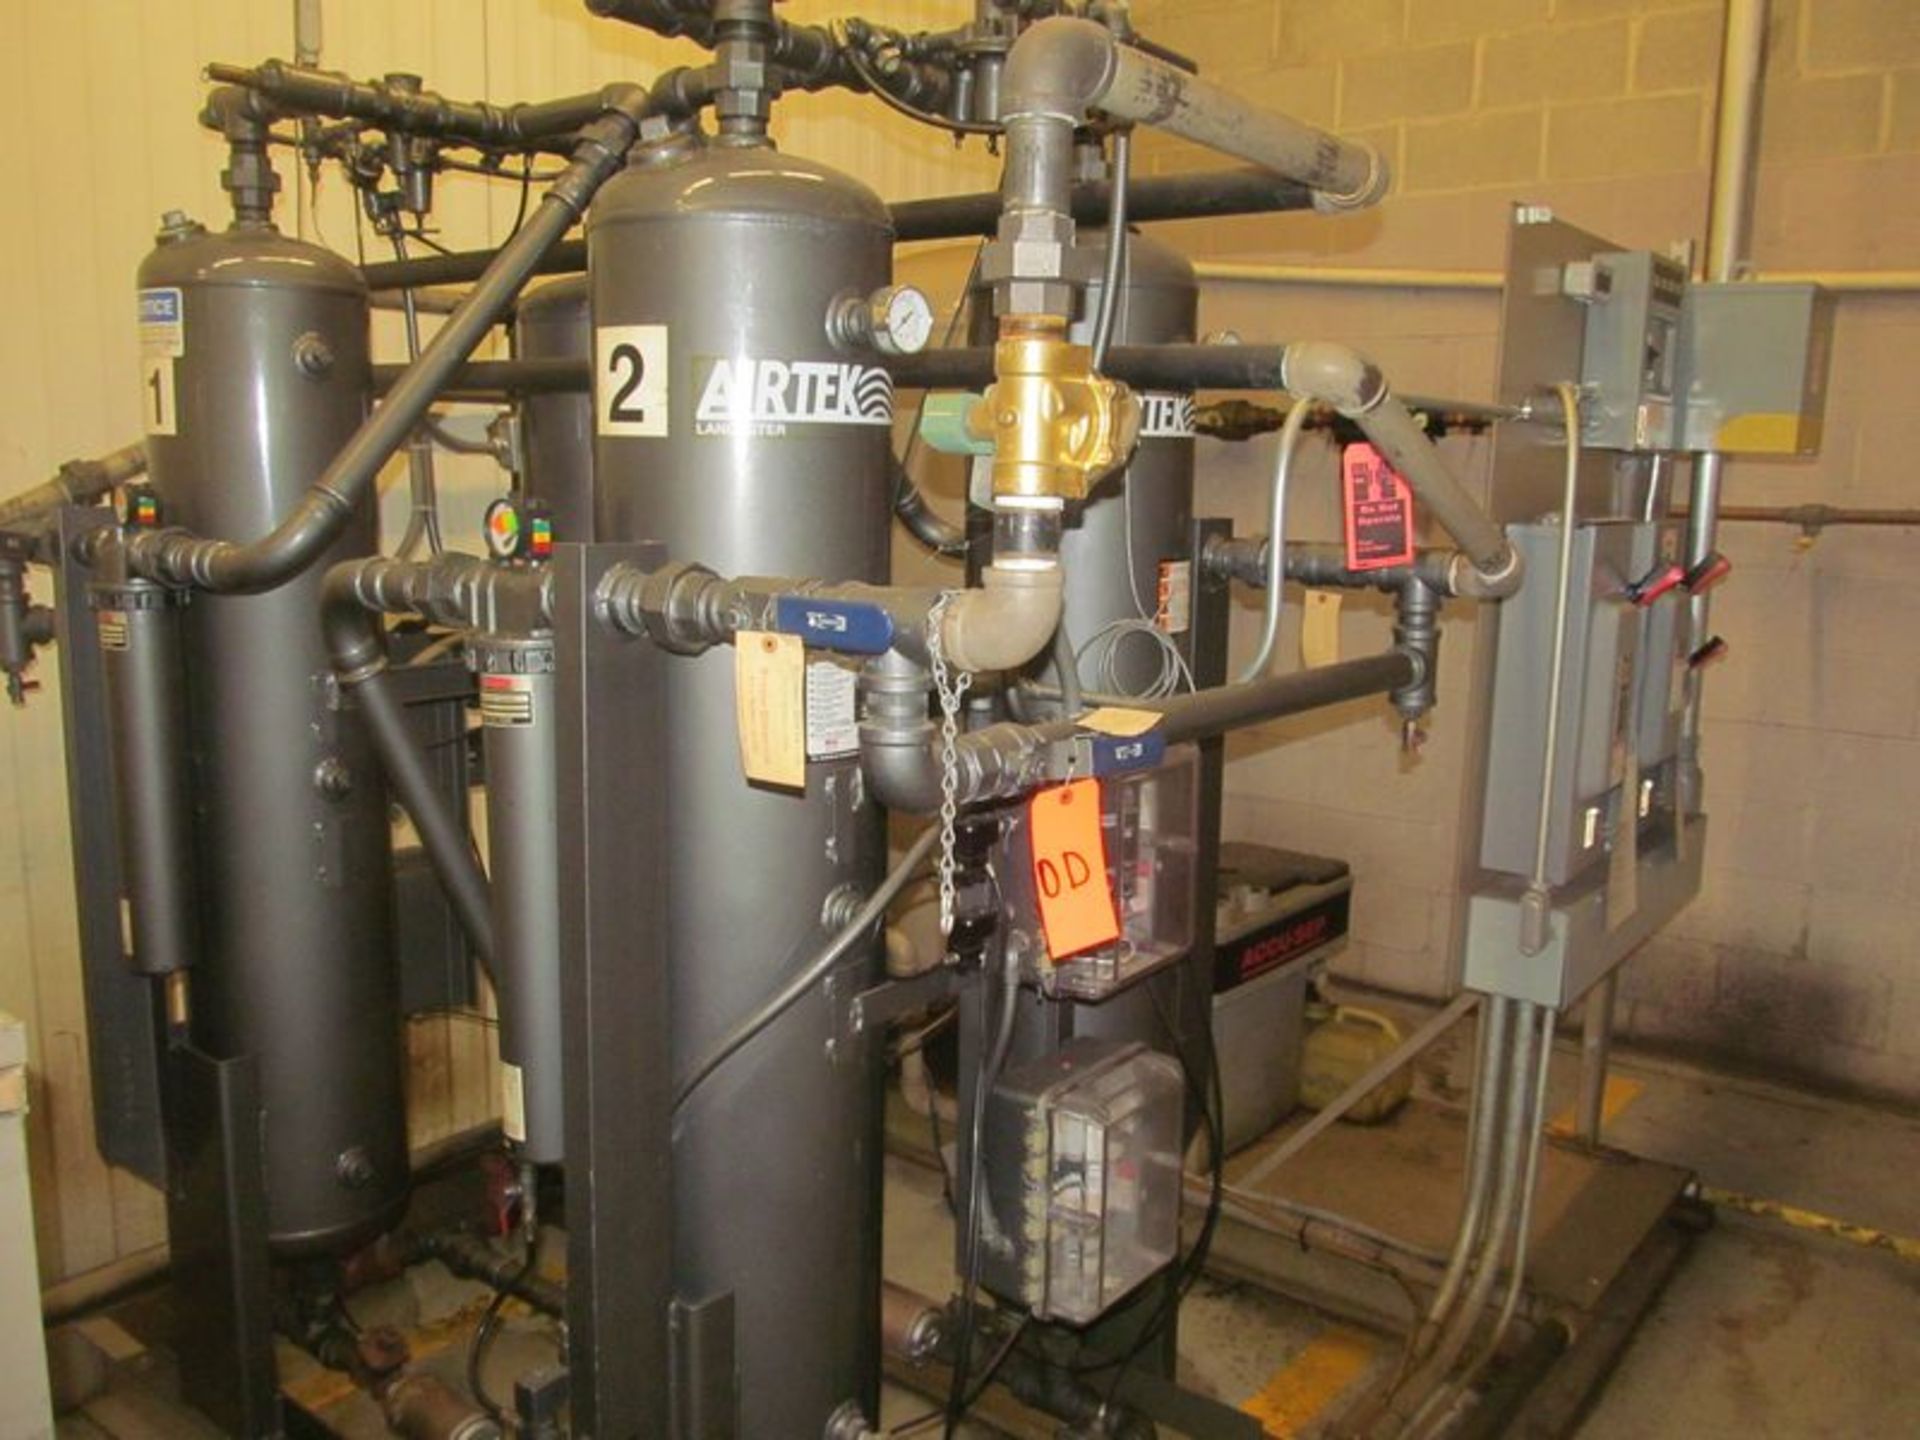 Airtek air dryer heatless desicant filtration system with (4) Airtek twin tower dryers, m/n TW200,